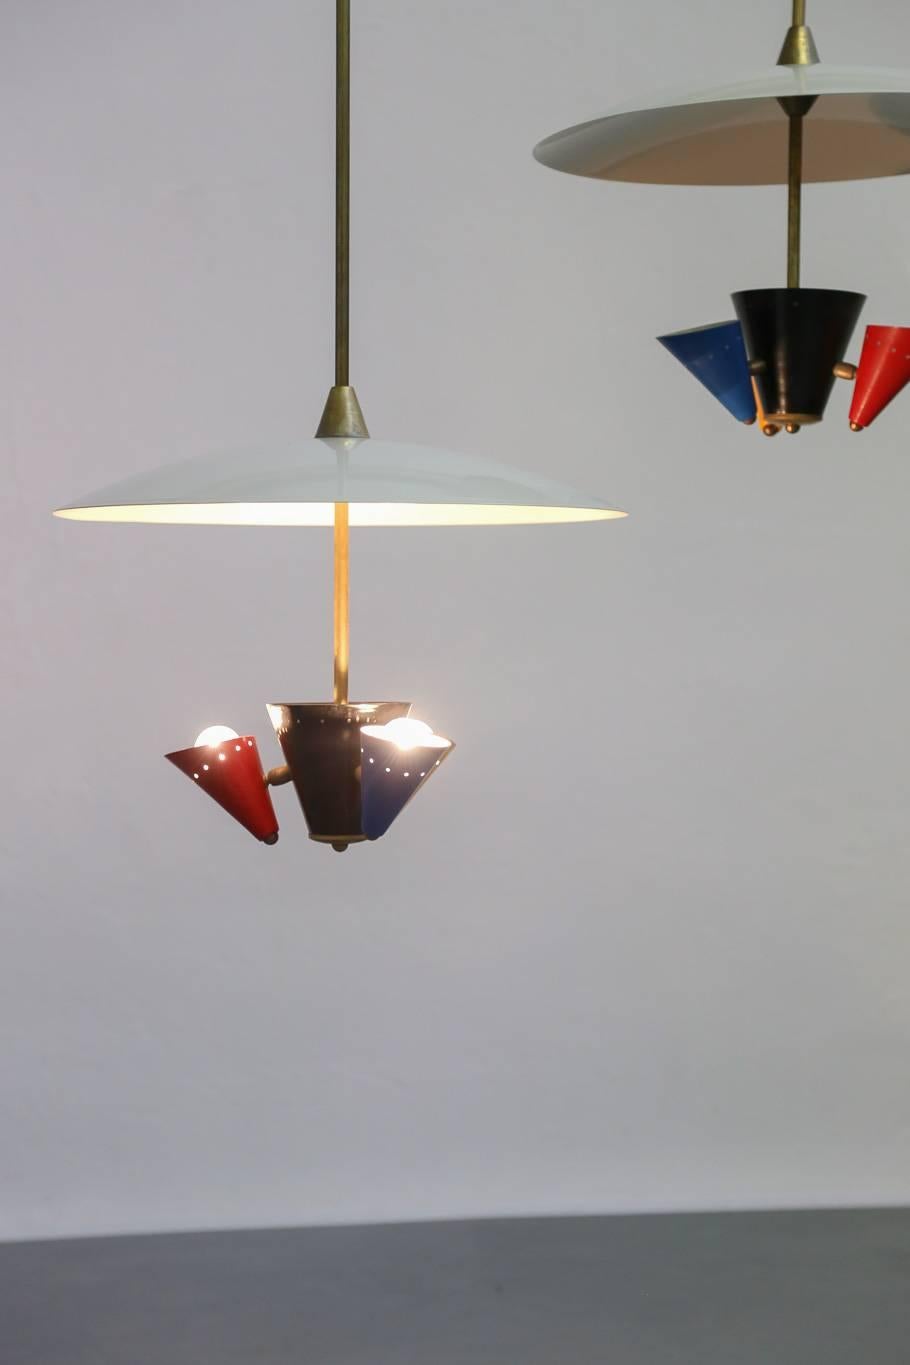 20th Century Pendant Lamp in the Style of Gino Sarfatti 1950s Stilnovo